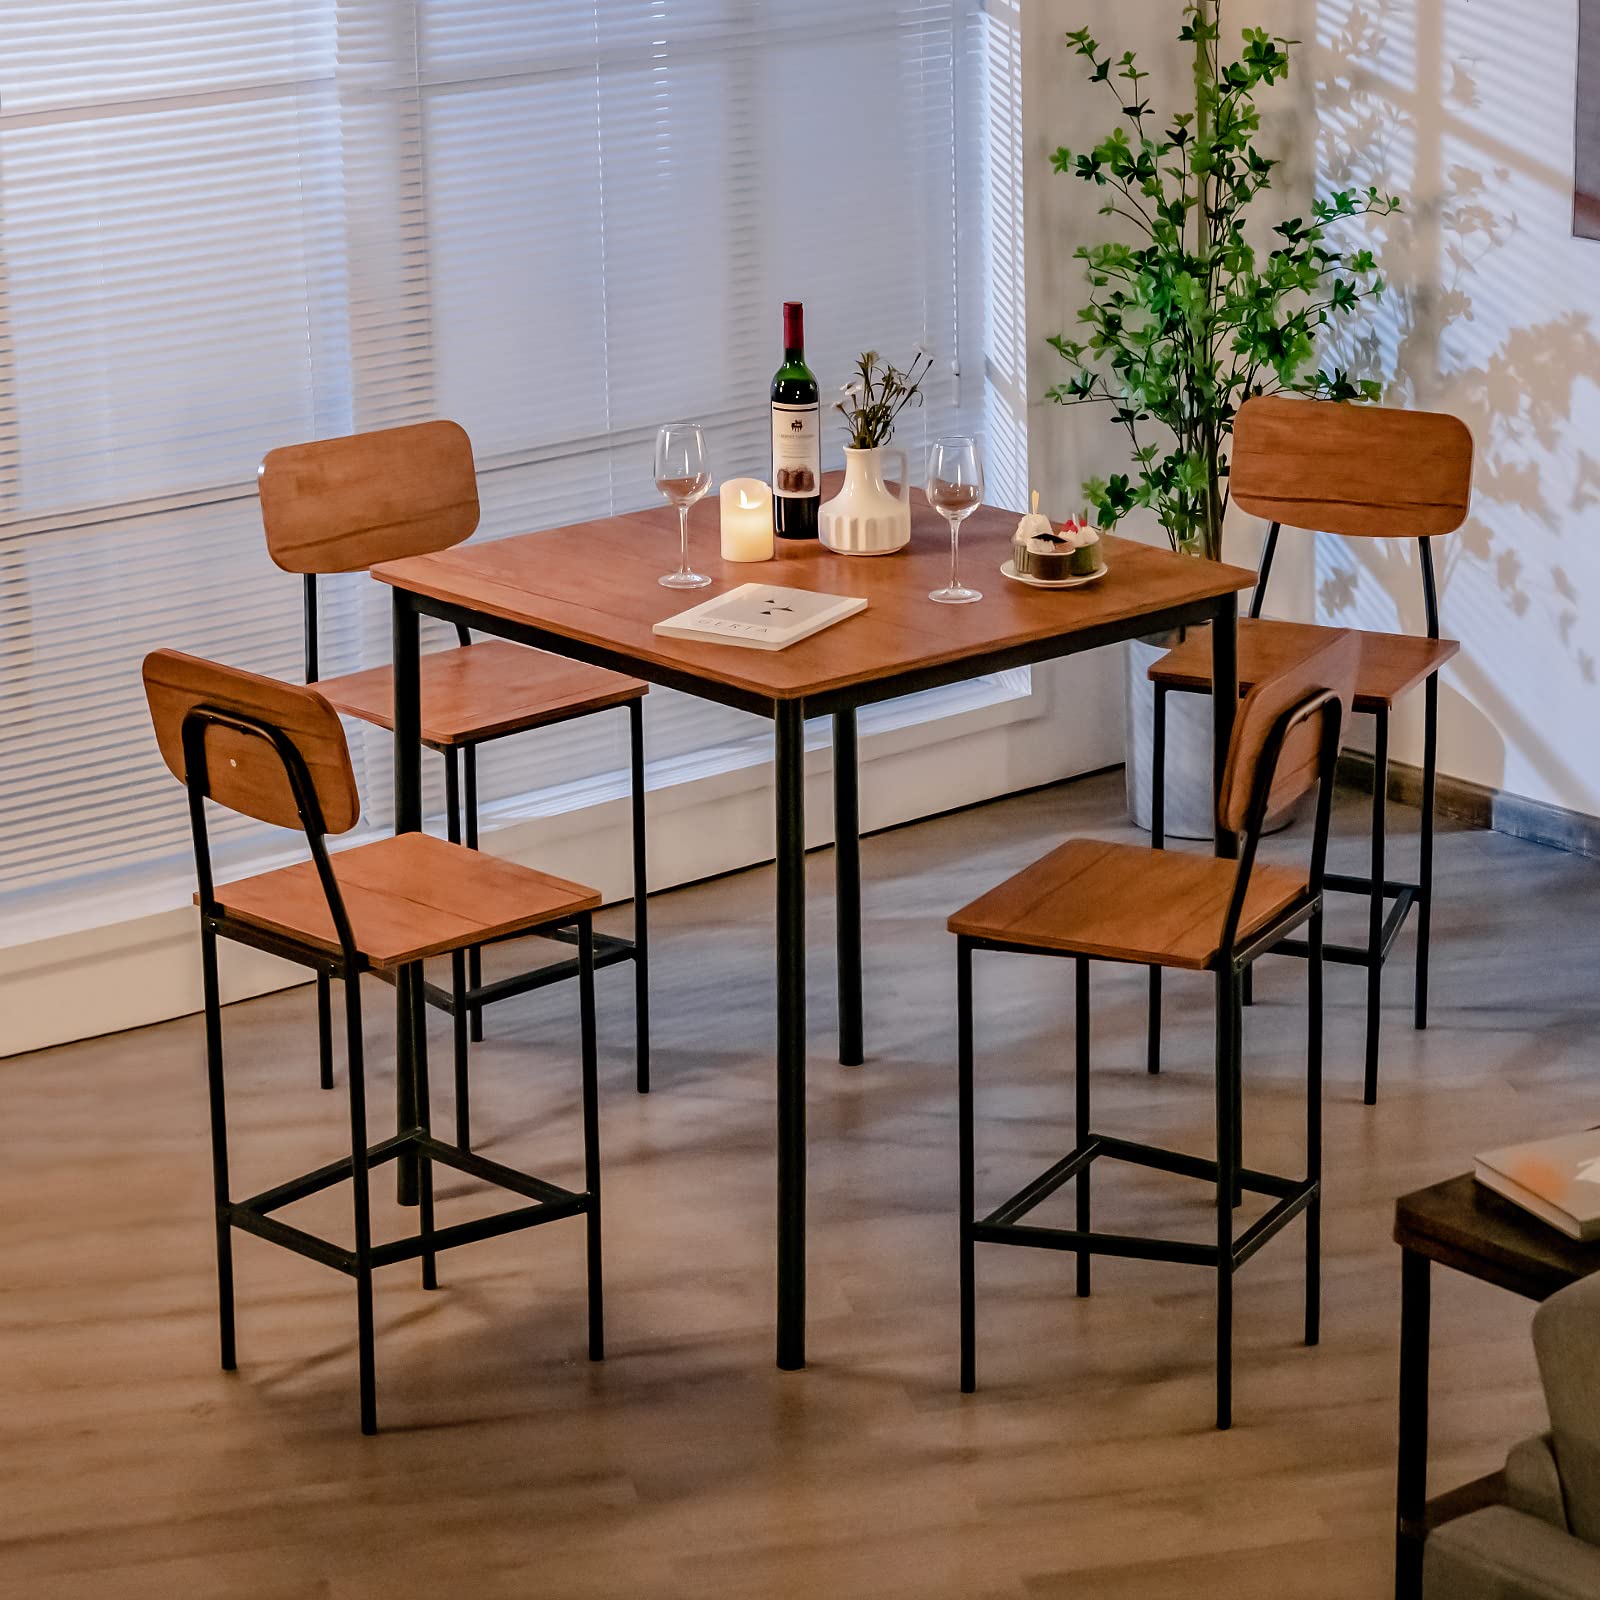 5-Piece Dining Table Set - Giantex